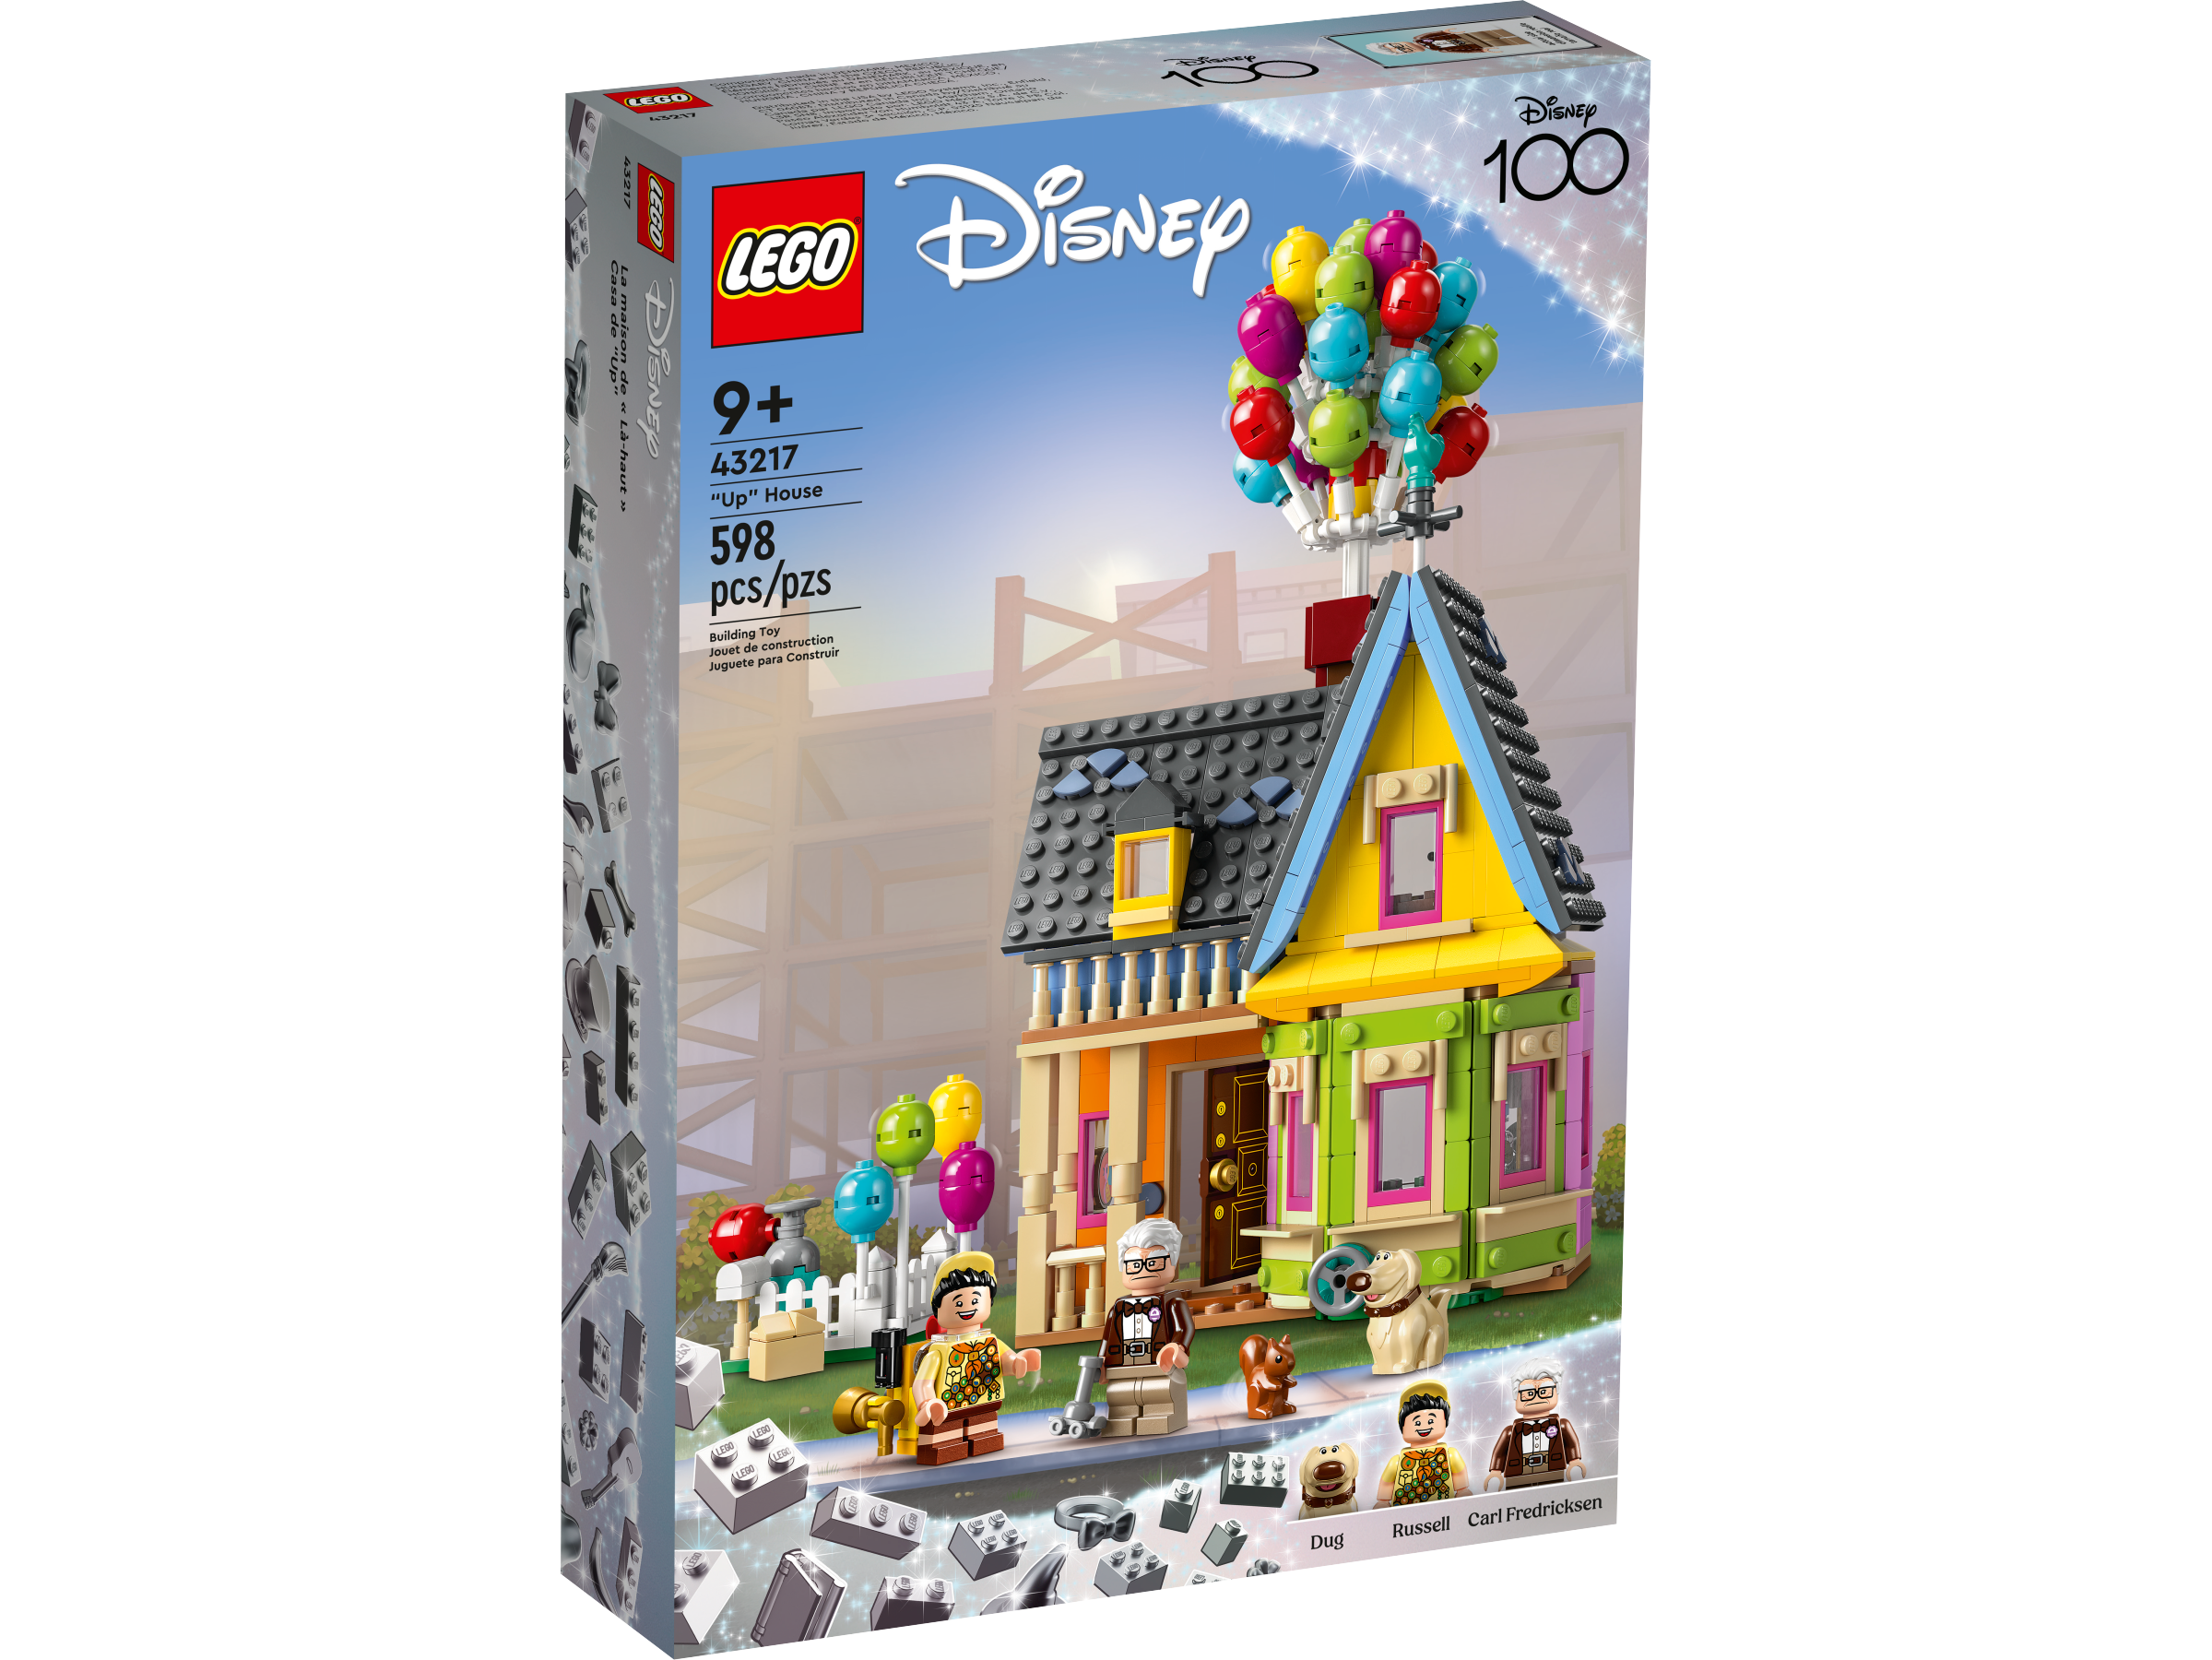 LEGO IDEAS - Carl's House From Disney Pixar's Up